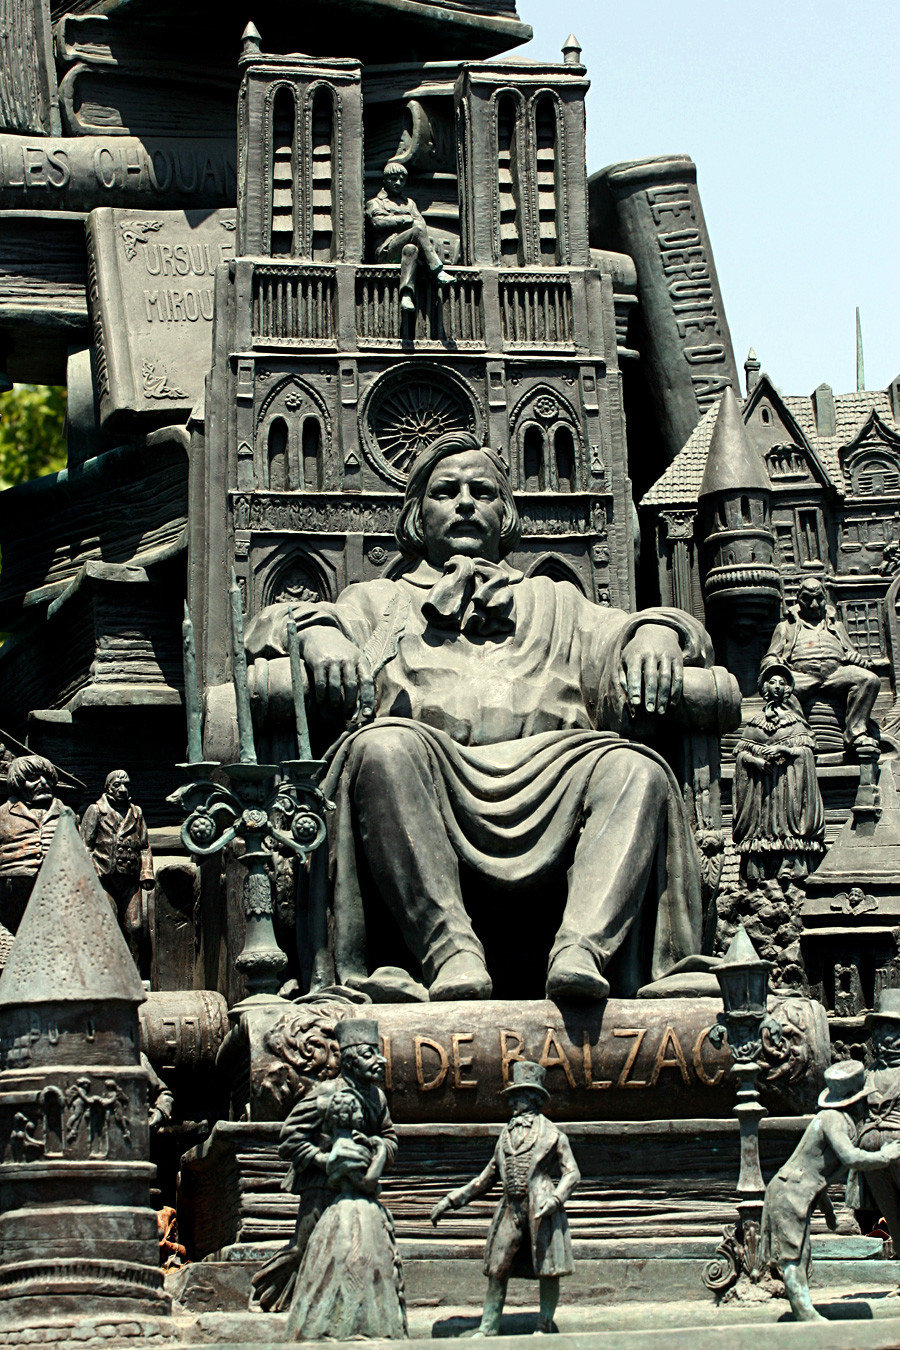 The monument to Honore de Balzac